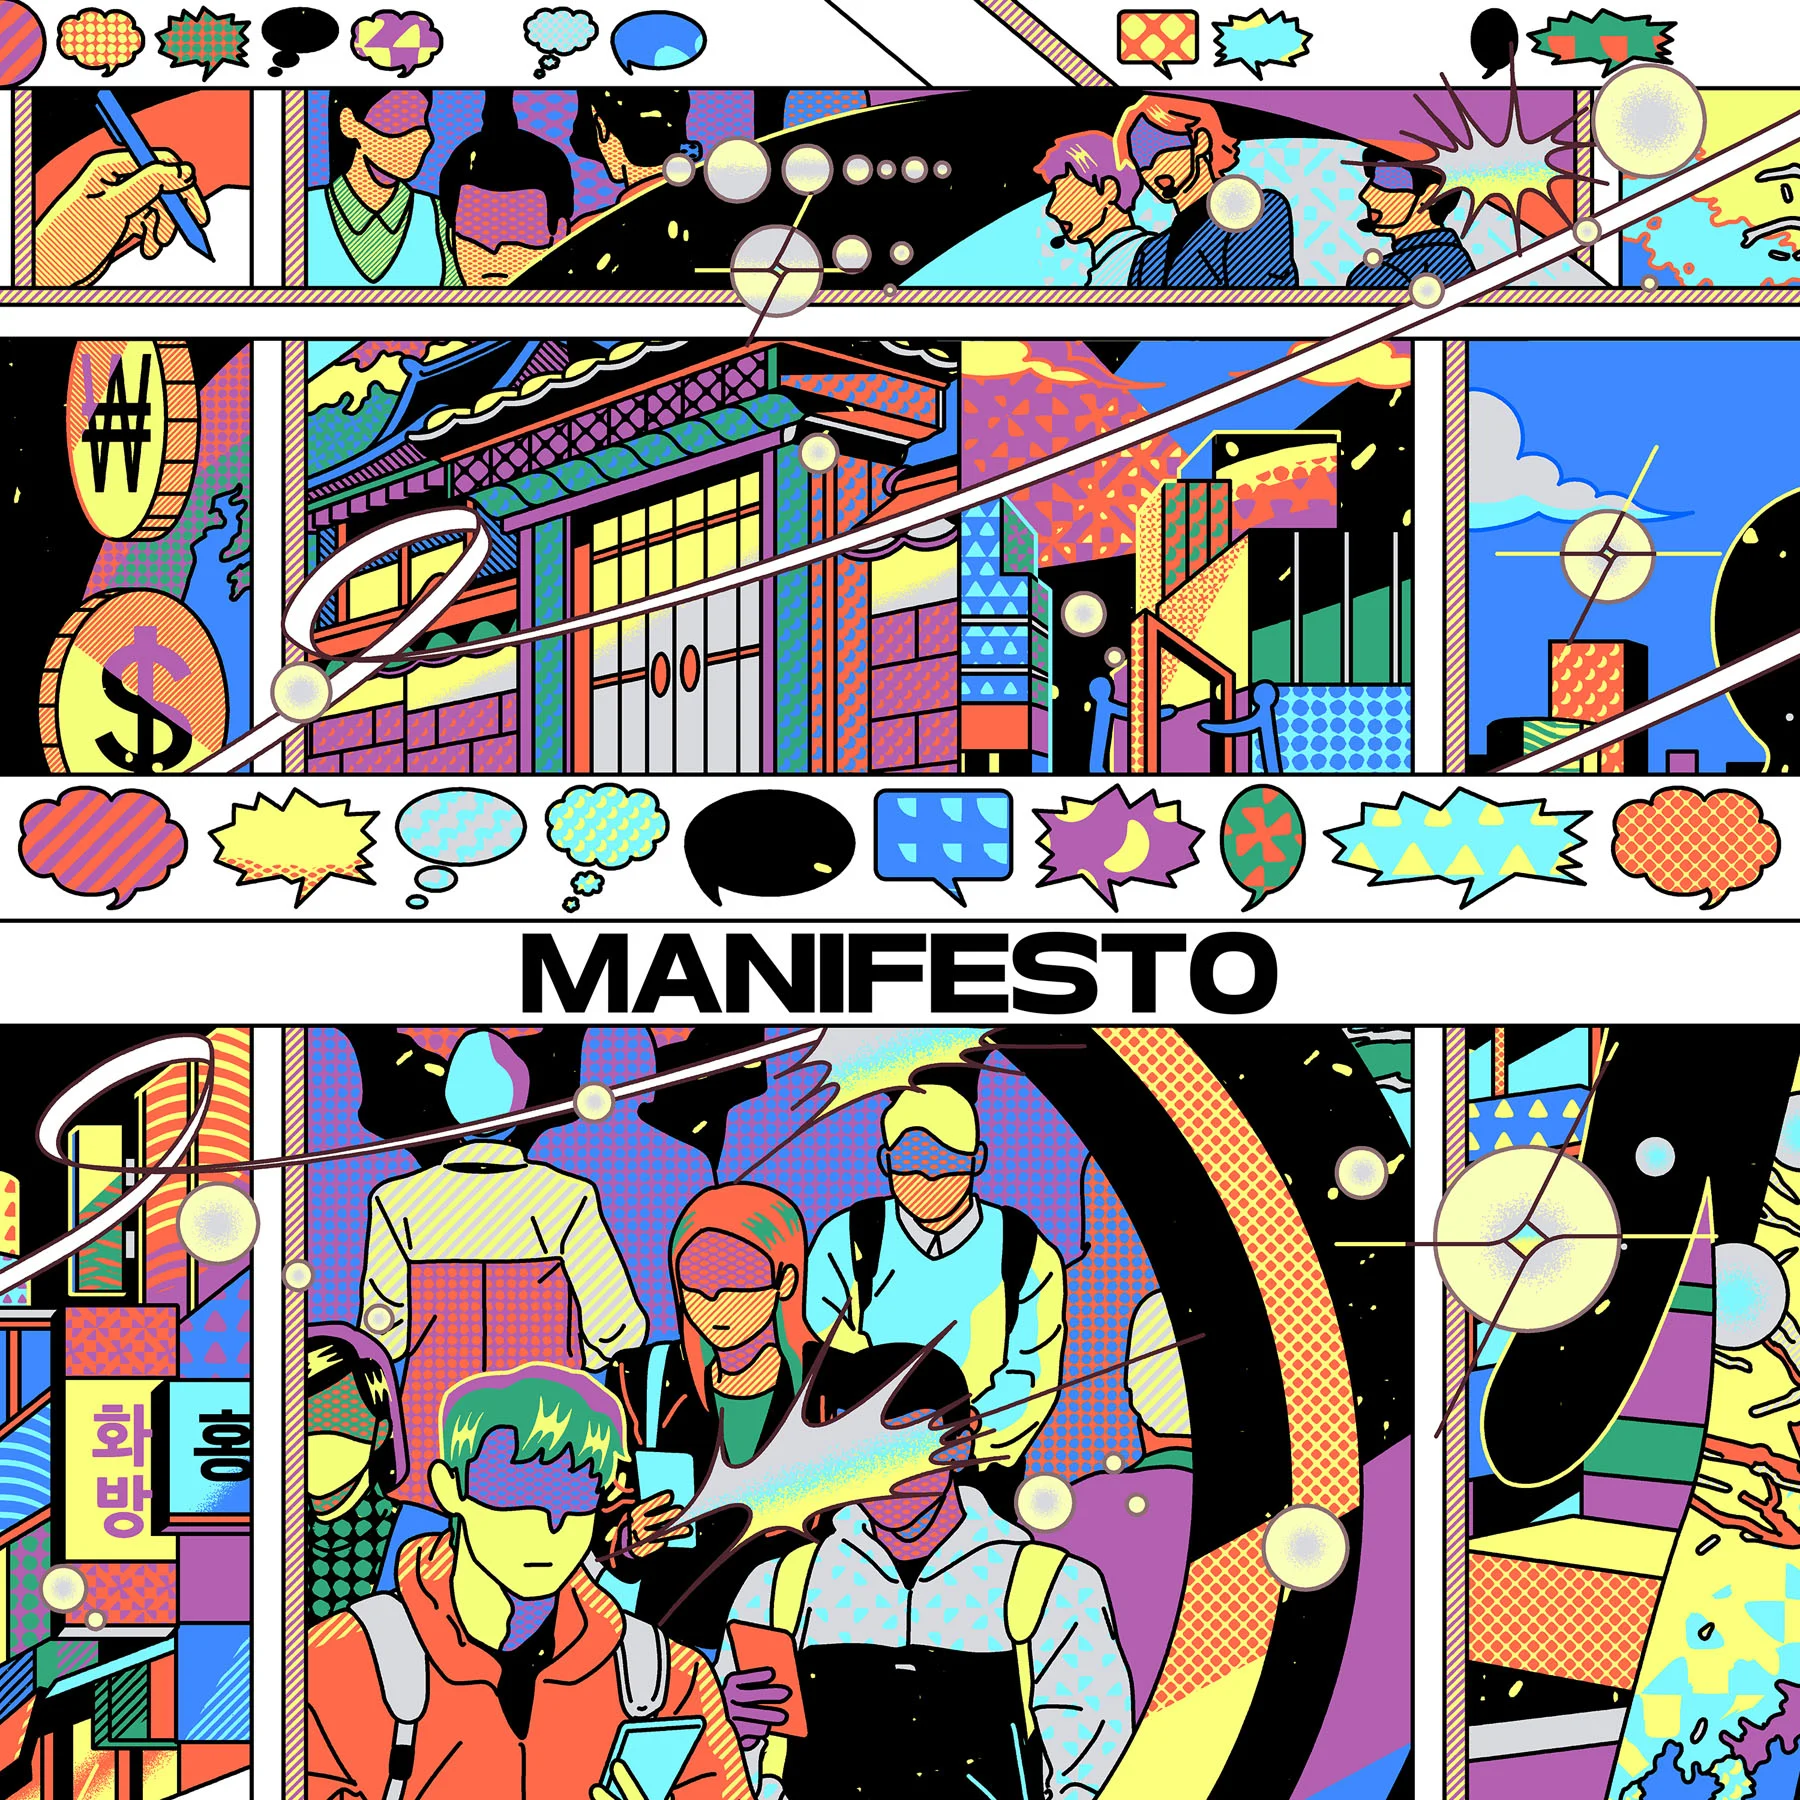 A Manifesto by Daehyung Lee